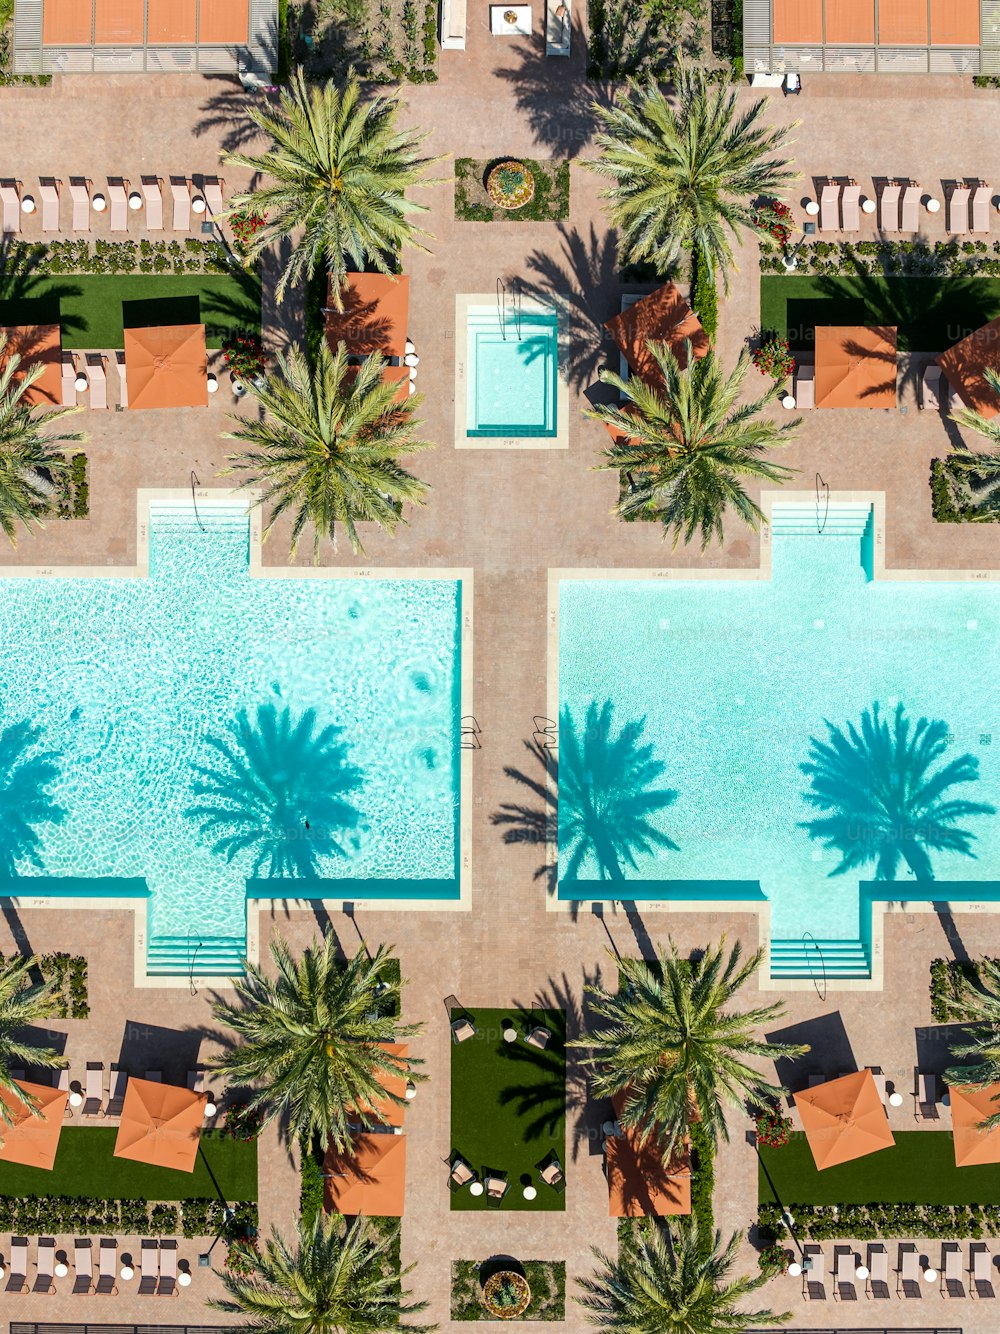 una veduta aerea di una piscina circondata da palme